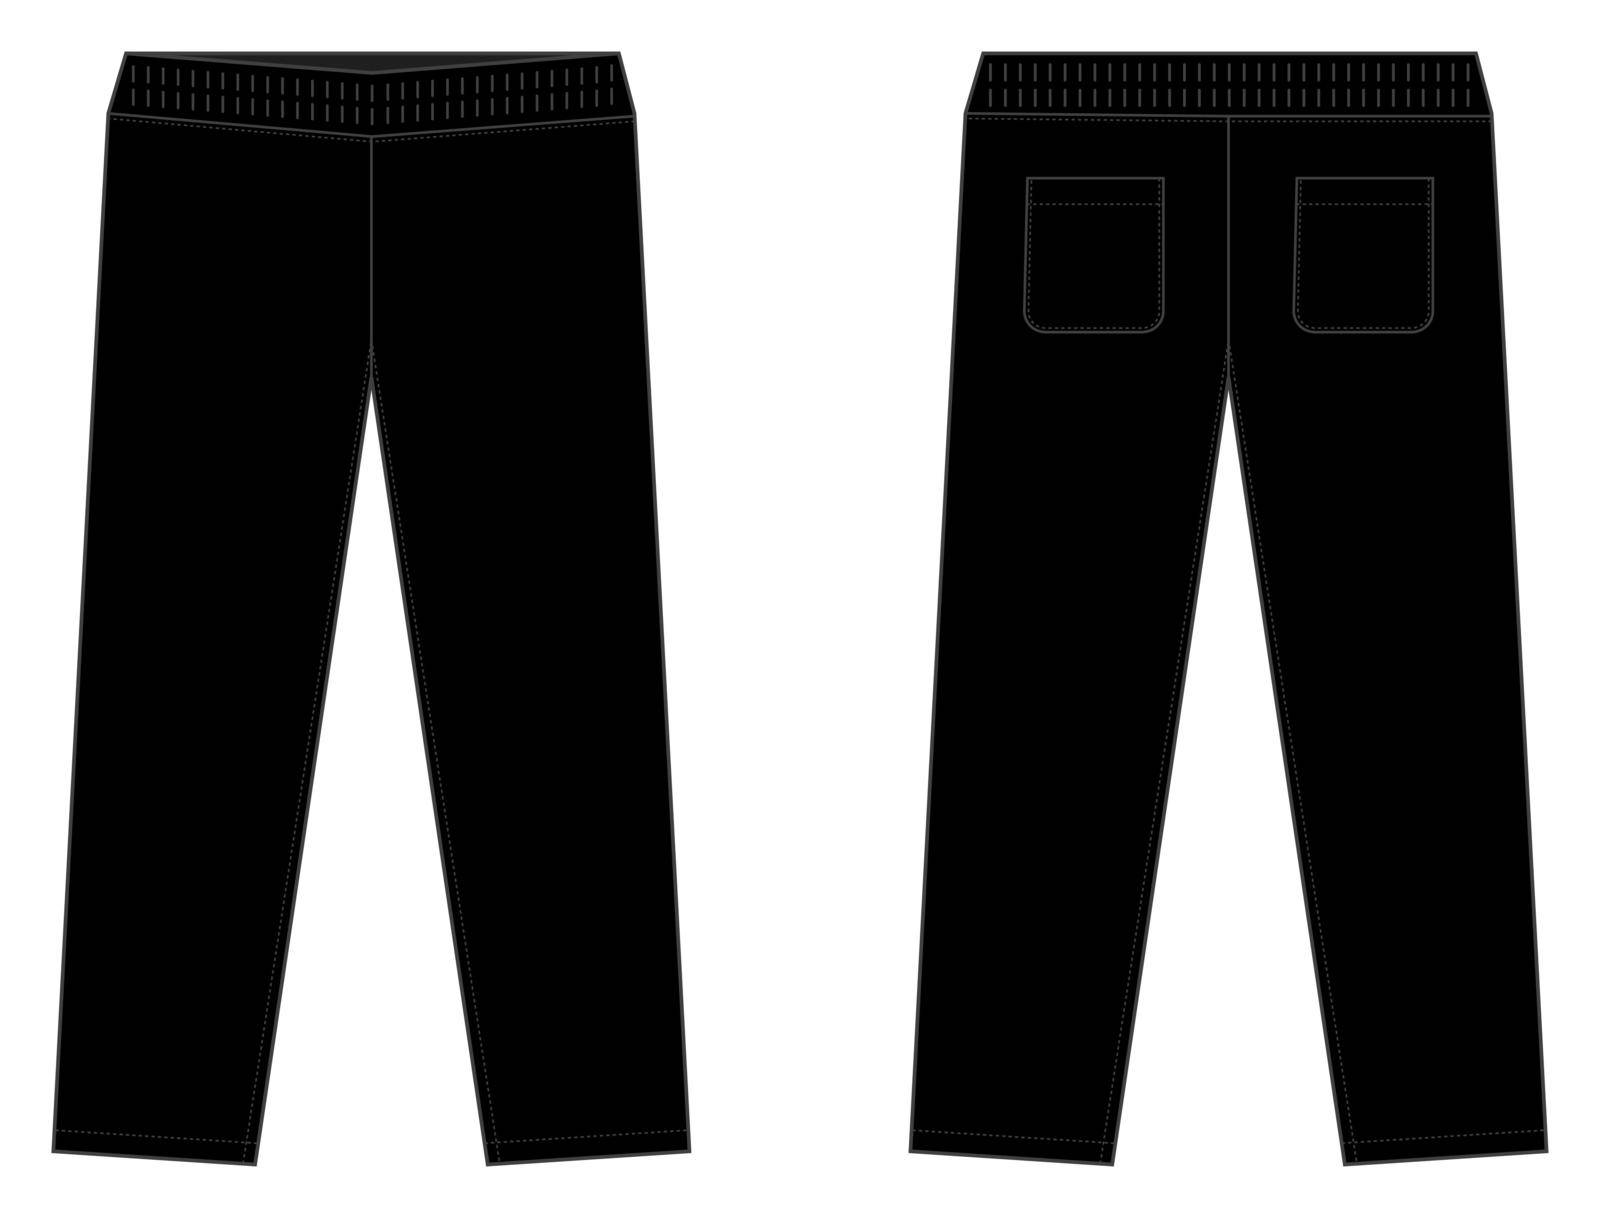 Casual jersey pants / sweat pants template vector illustration / black